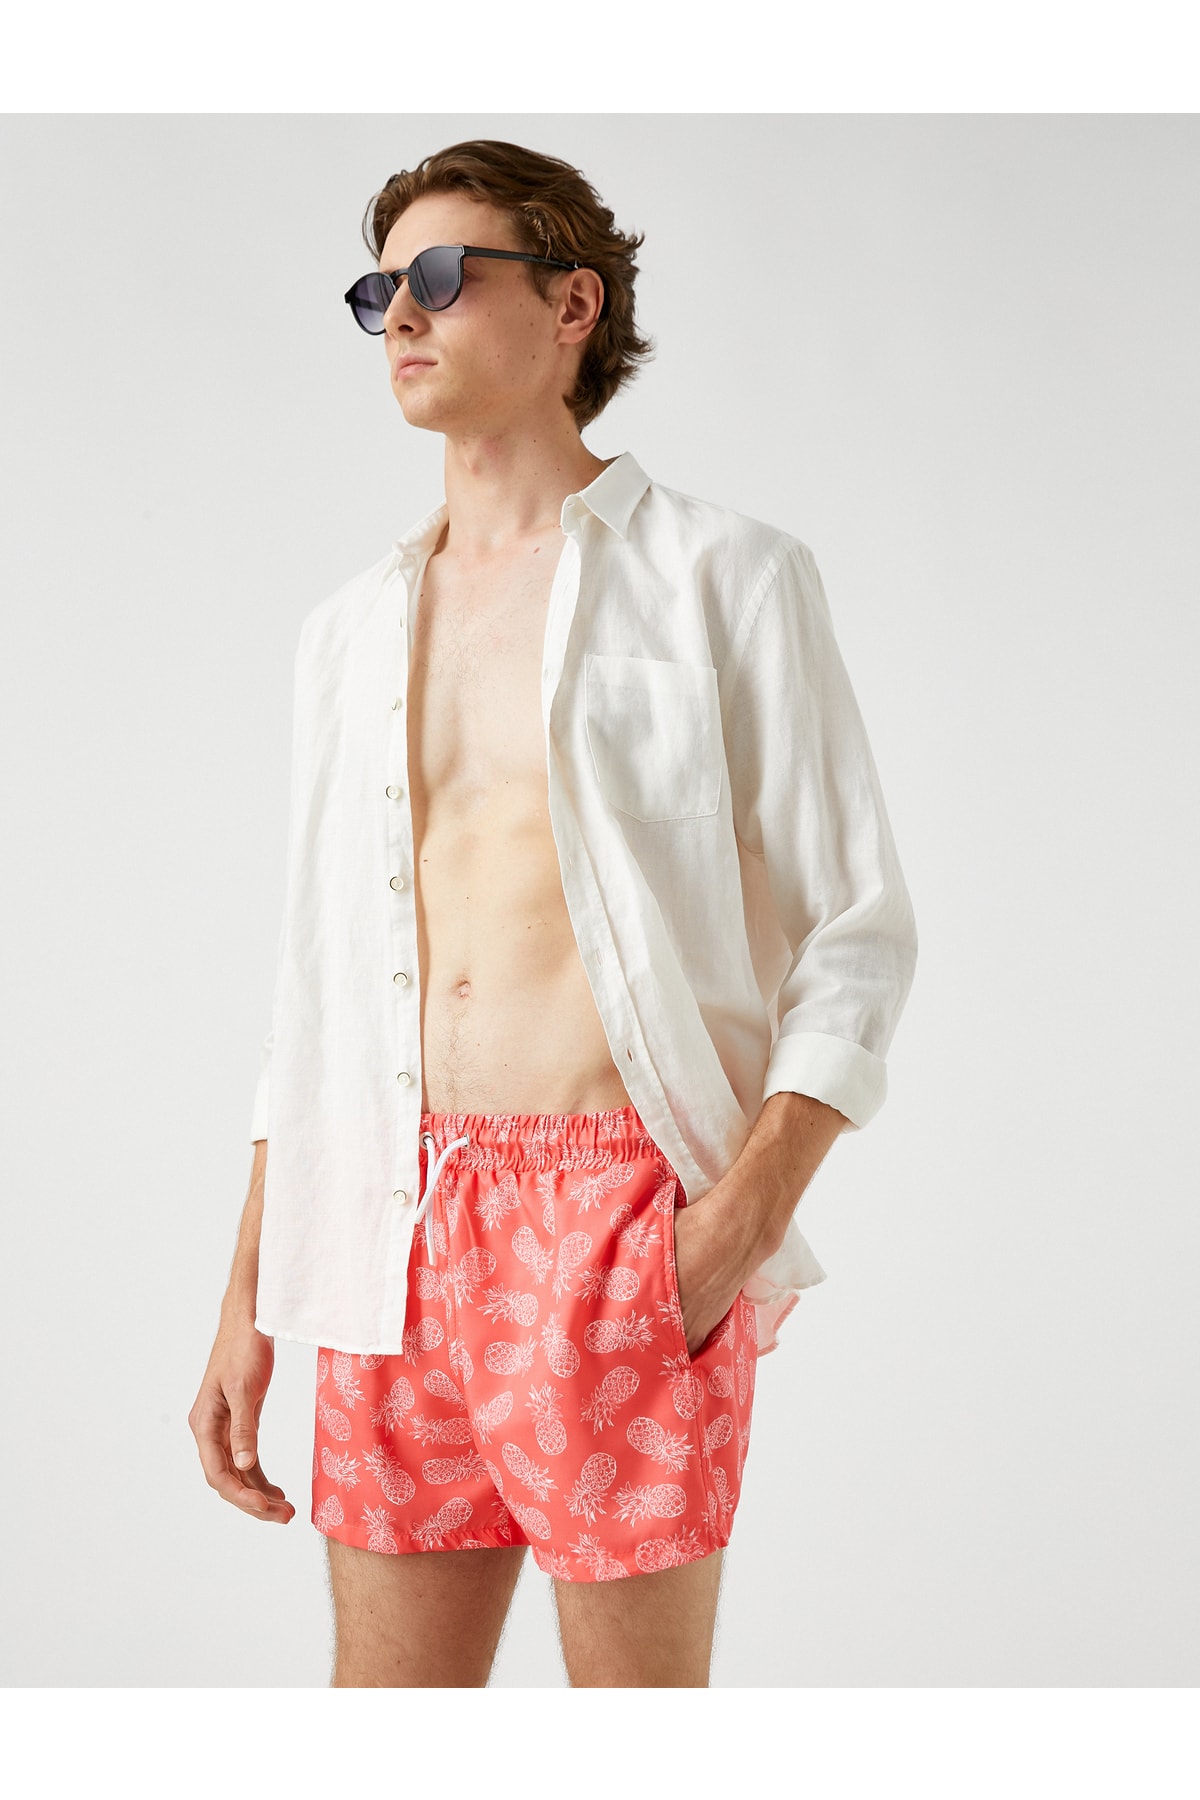 Koton Swimsuit Shorts Pineapple Printed, Pockets, Tie Waist